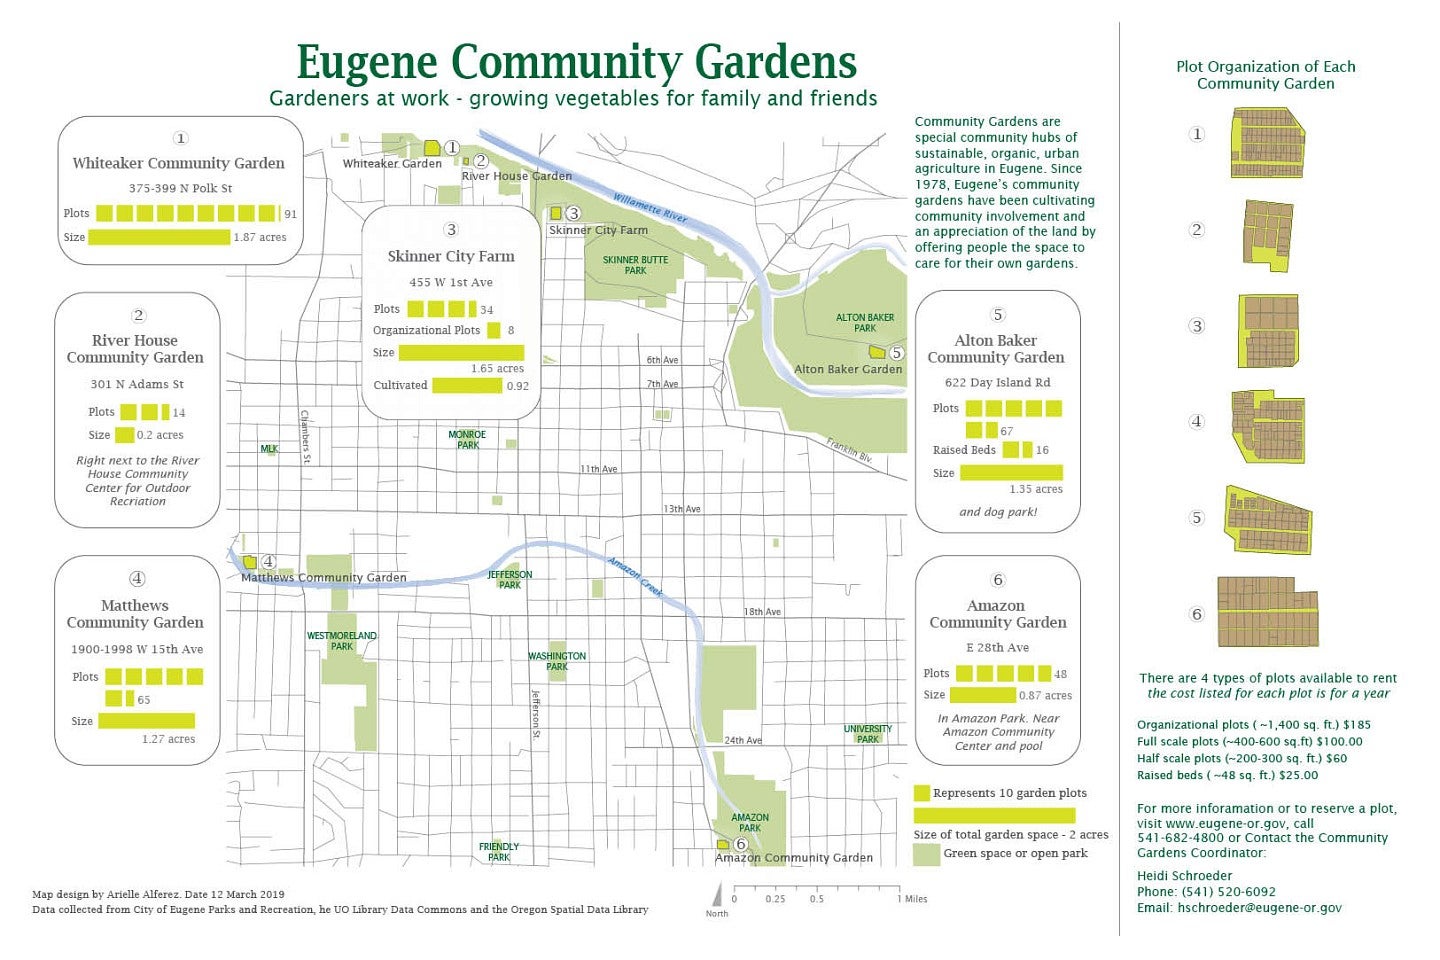 Map of community gardens in Eugene, OR